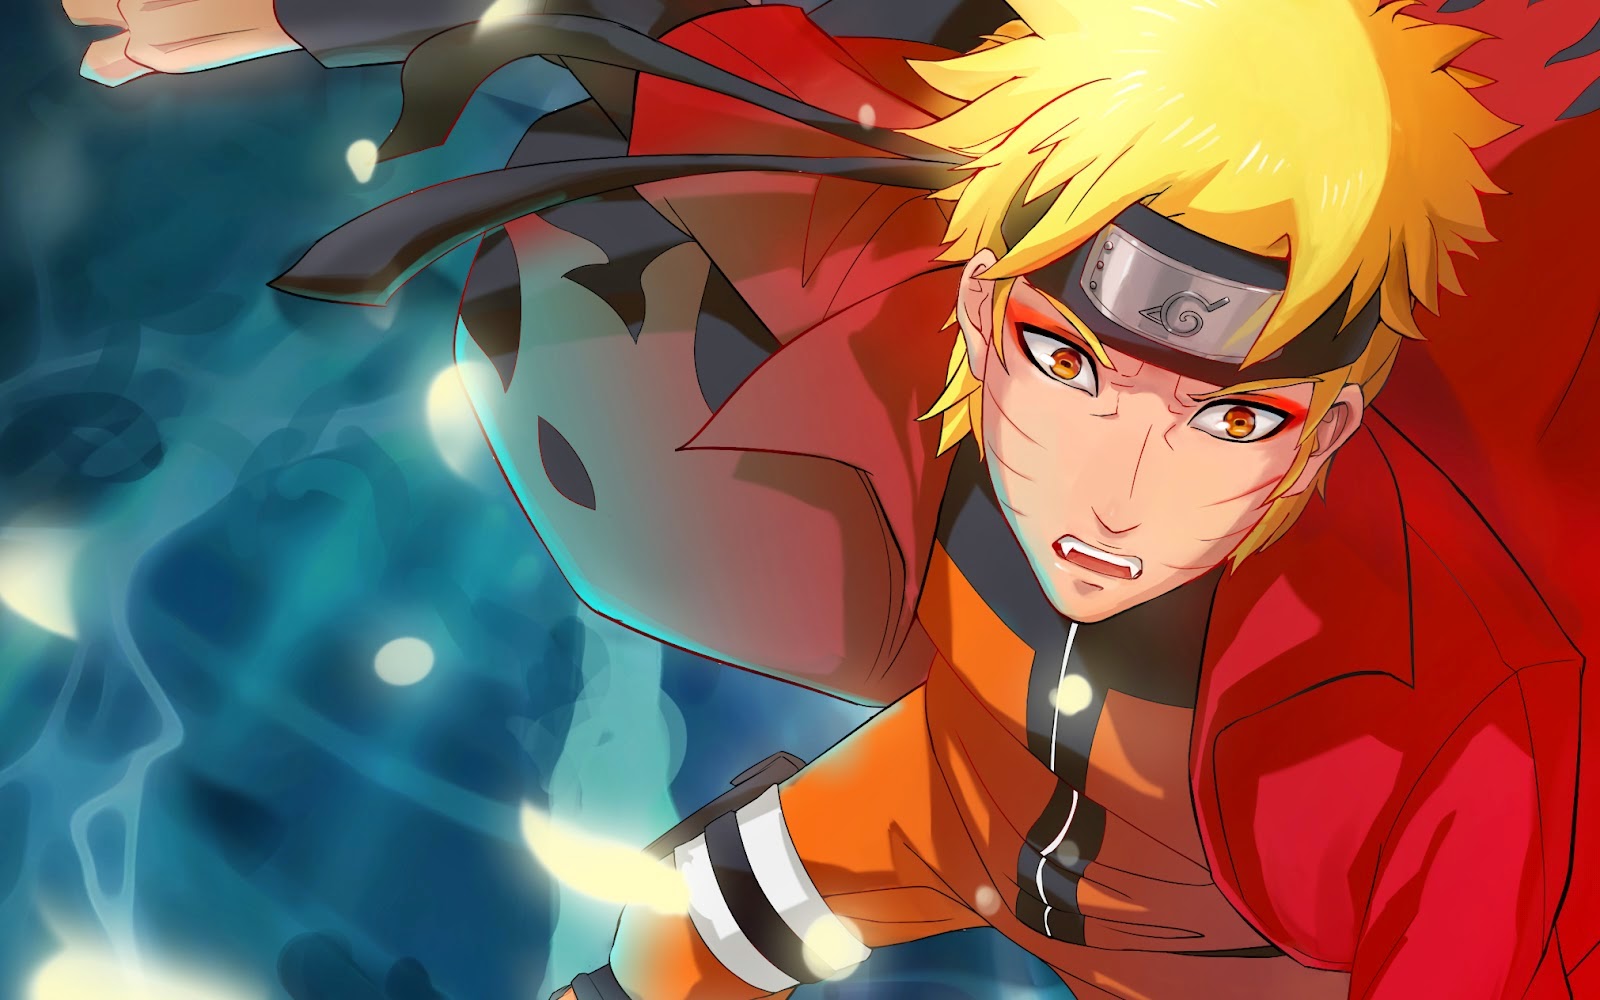 Download Gambar Kartun Naruto Terlengkap Gambar Kartun